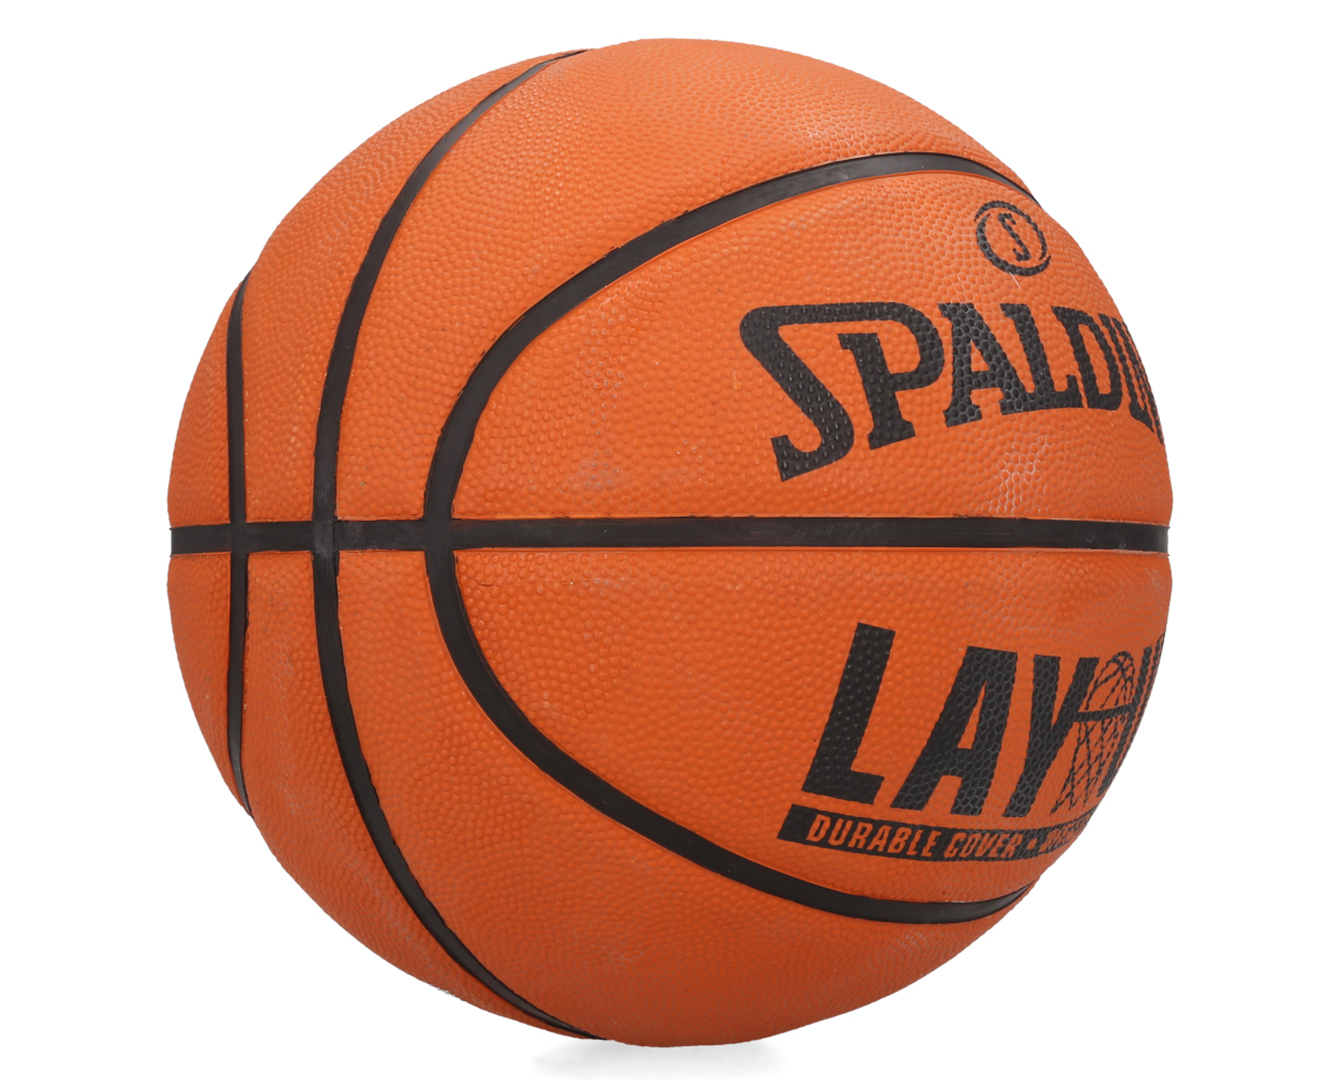 Spalding Lay-Up Size 6 Basketball - Orange/Black | Catch.com.au